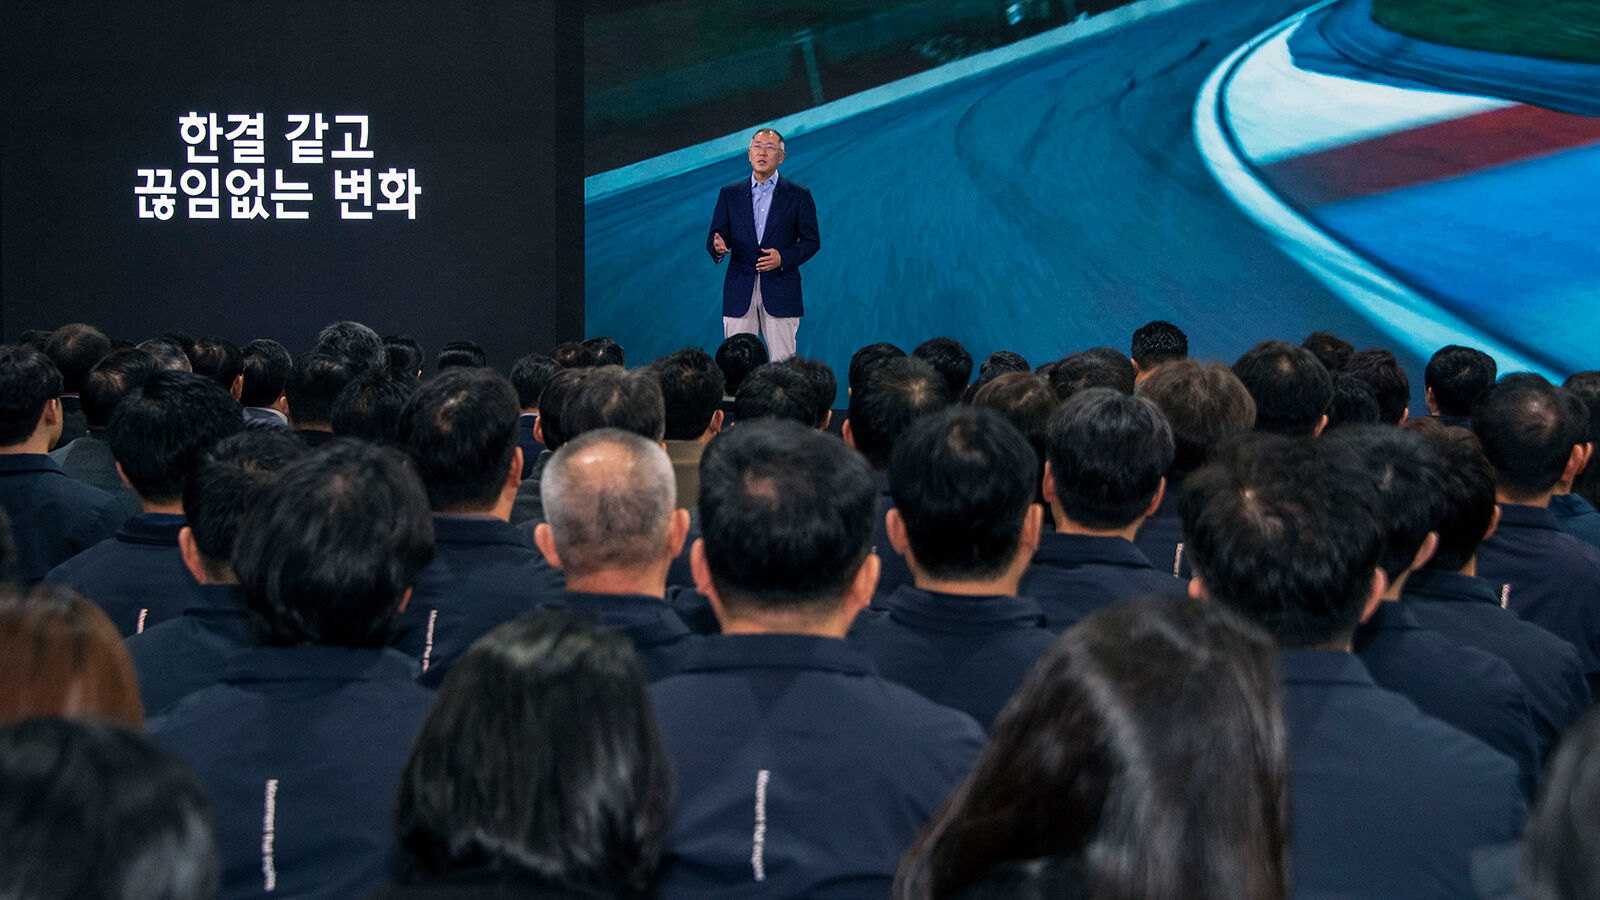 Hyundai Motor Group Executive Chair Euisun Chung addresses the New Year's Message